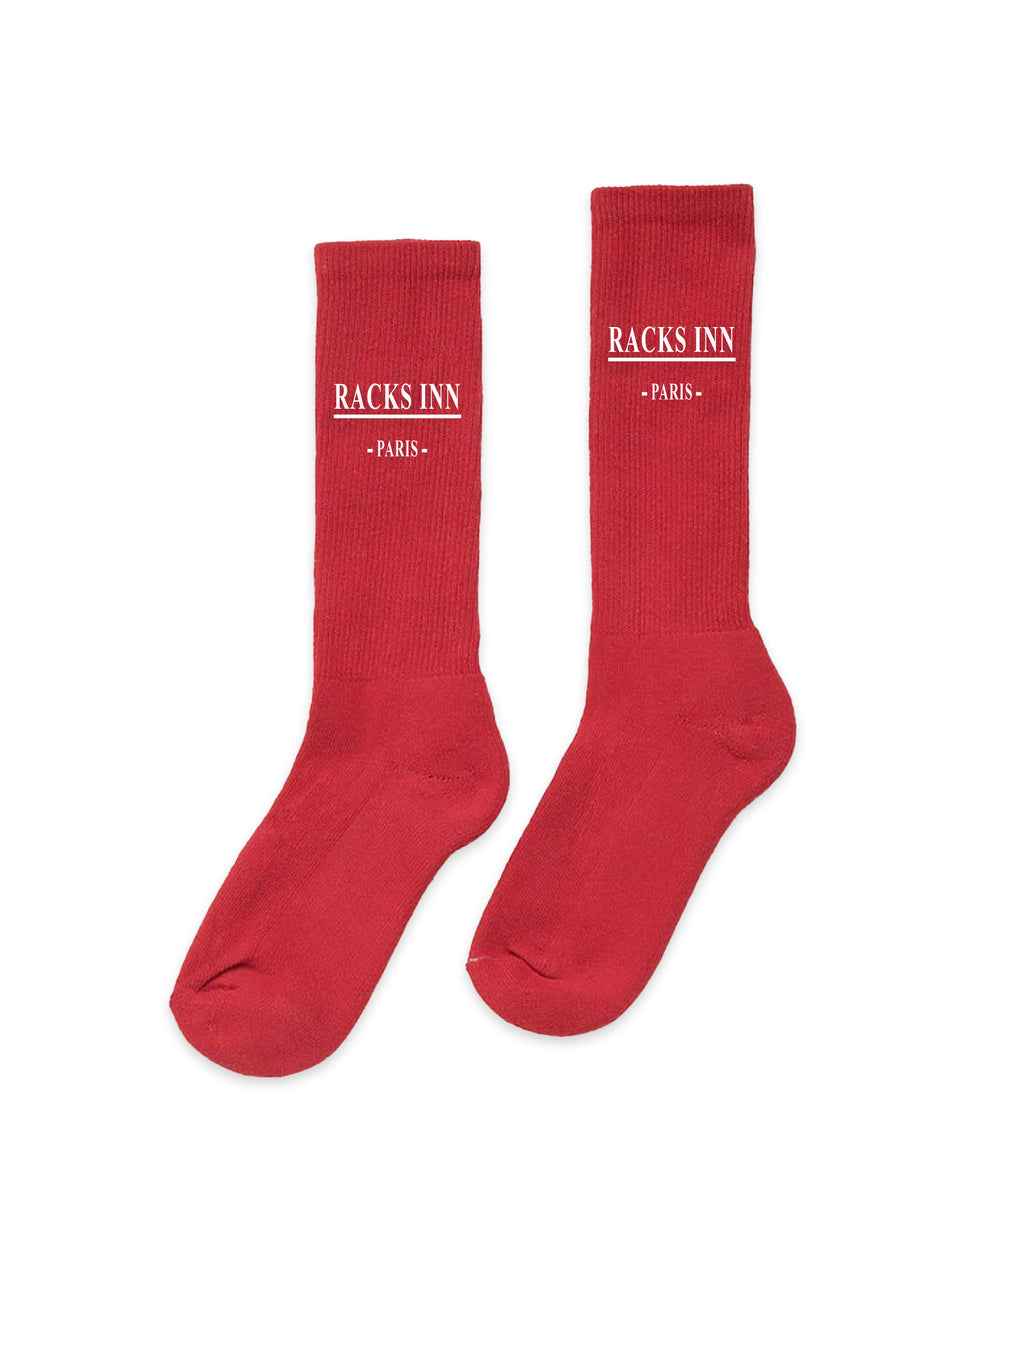 Paris Socks - Red